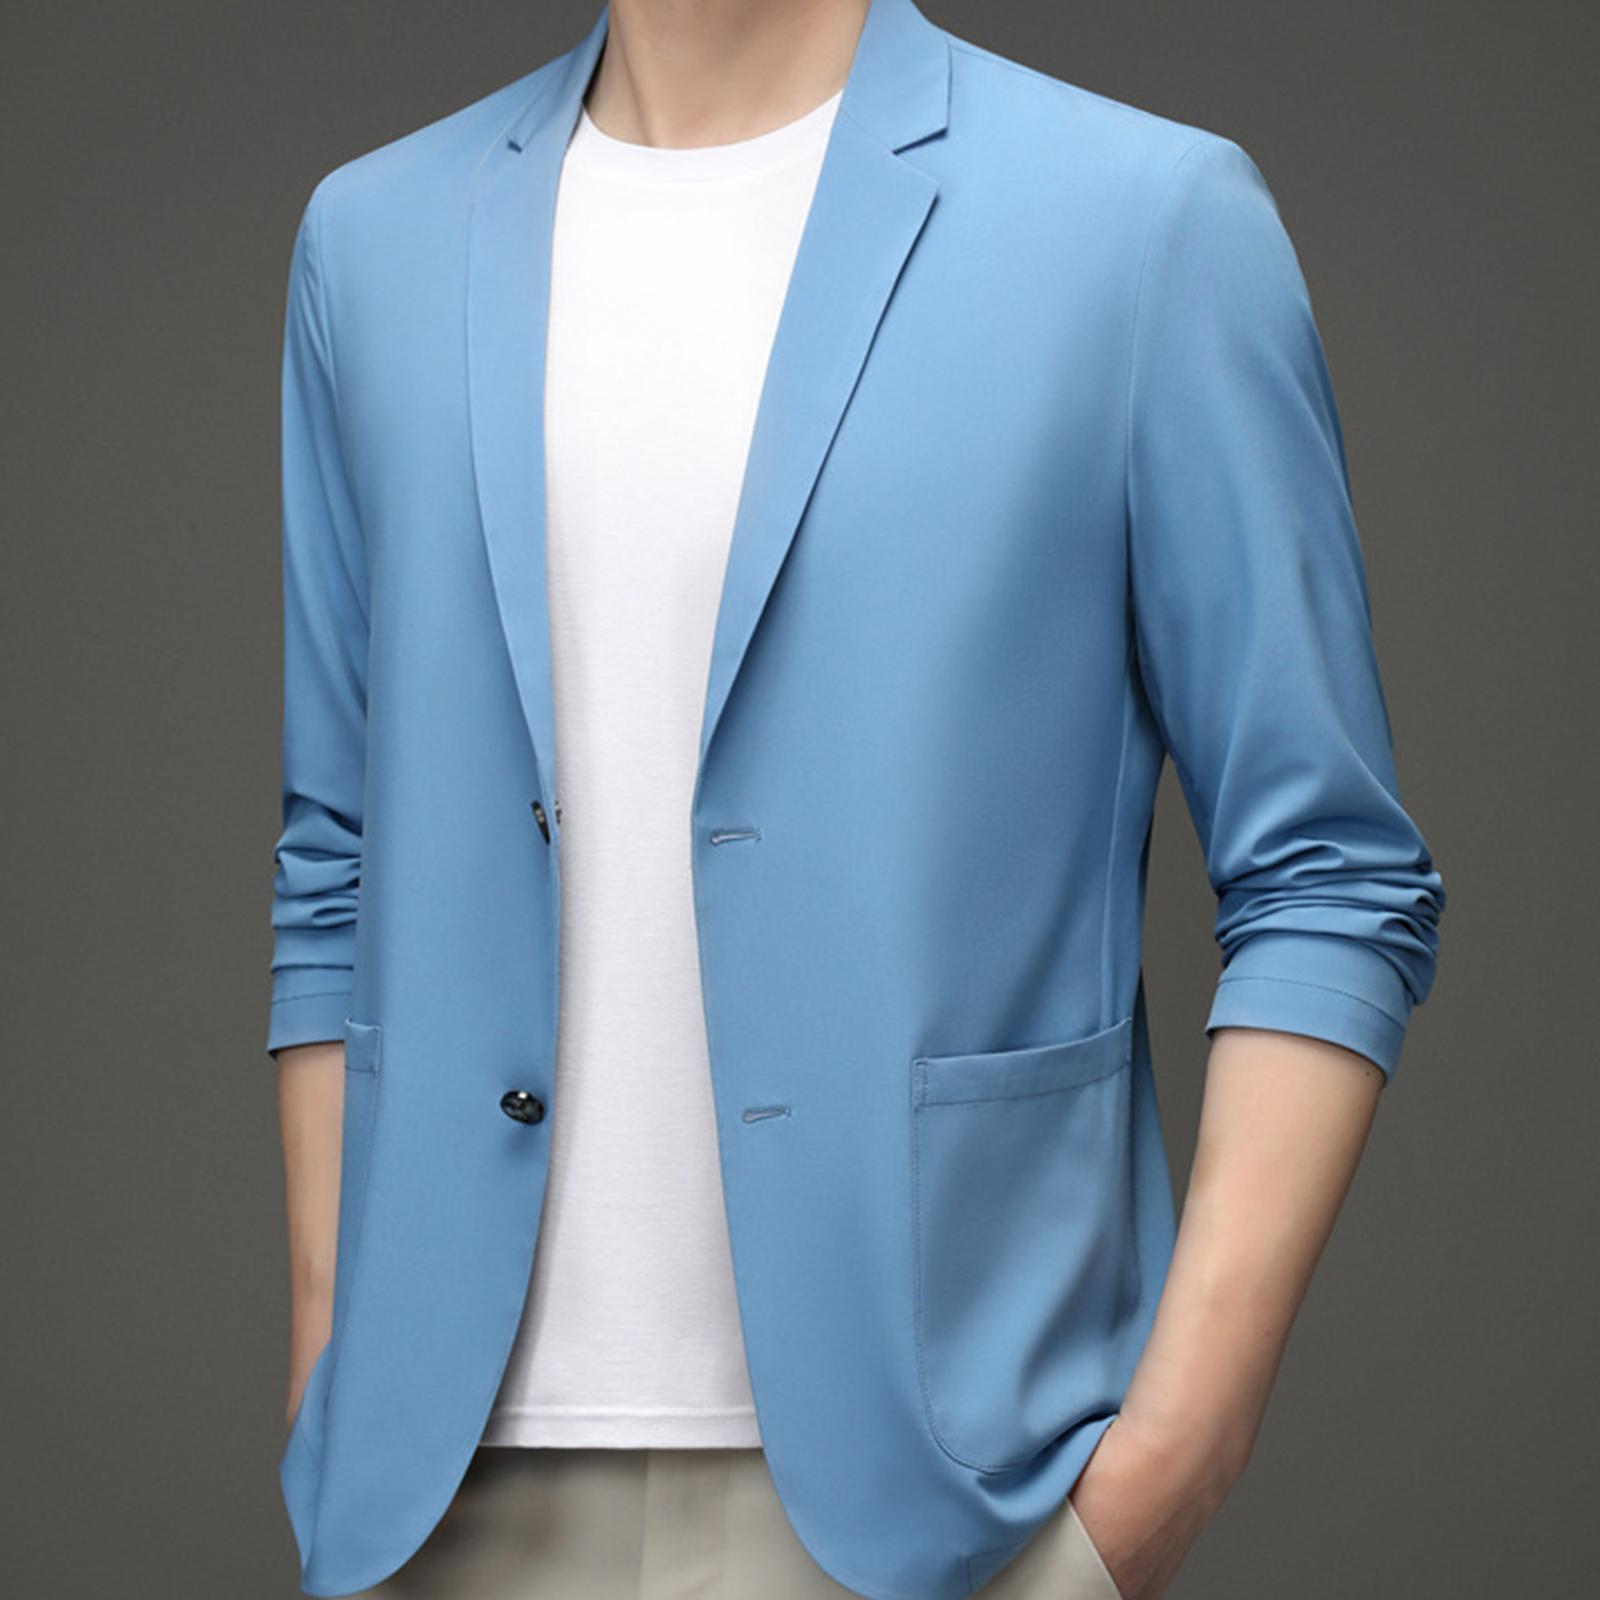 Suit Jacket Men Fashion Suit Blazer Men for Holidays Office Gift Blue Color M